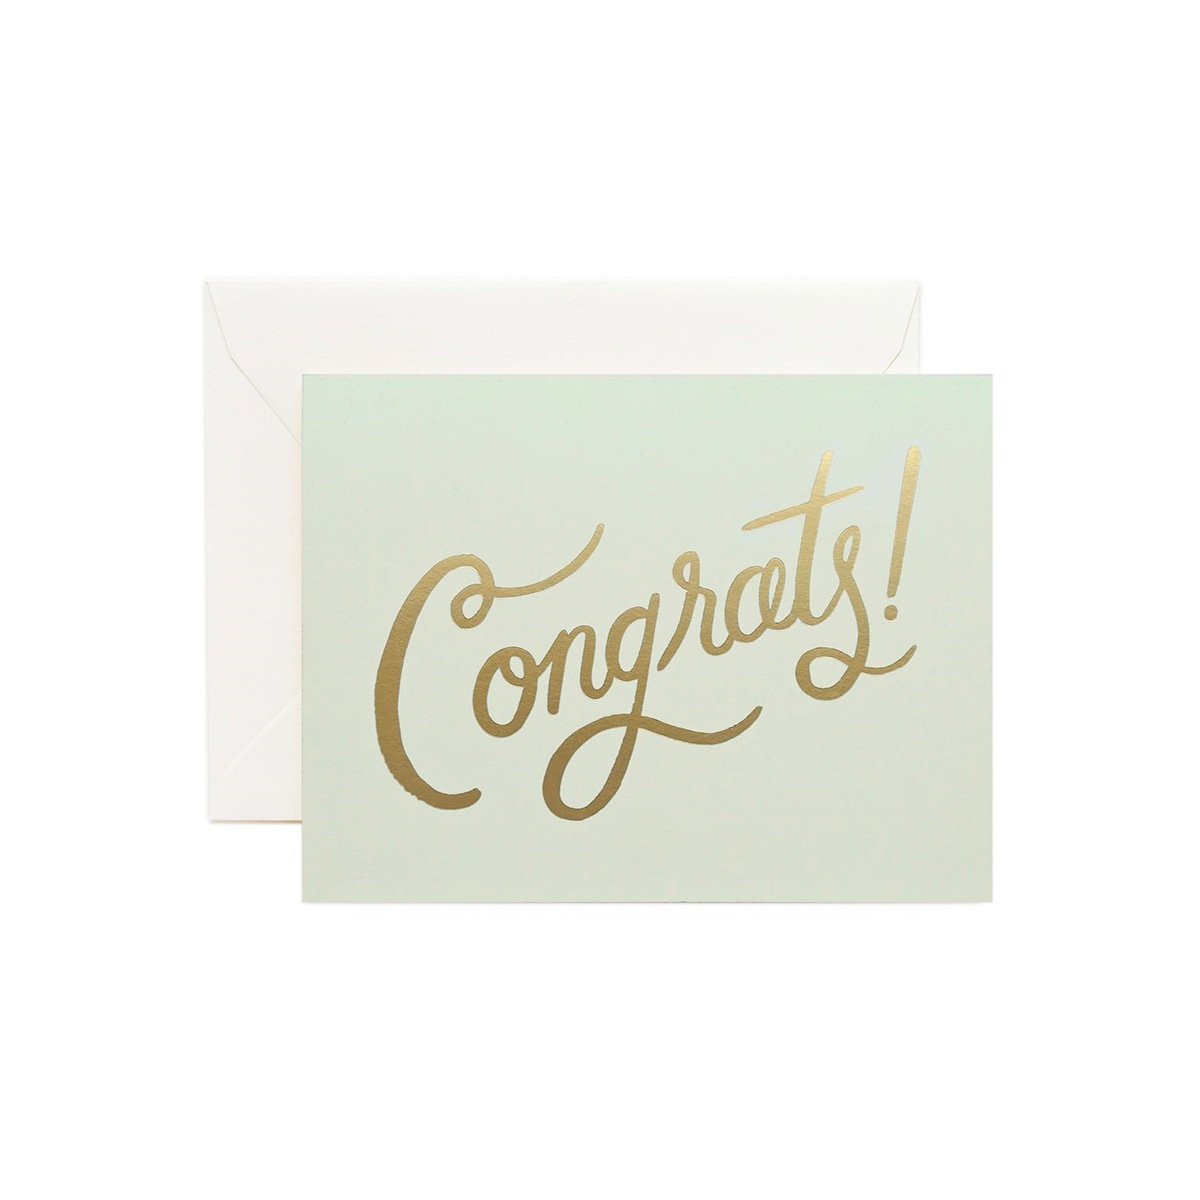 Greeting Card - Congrats!